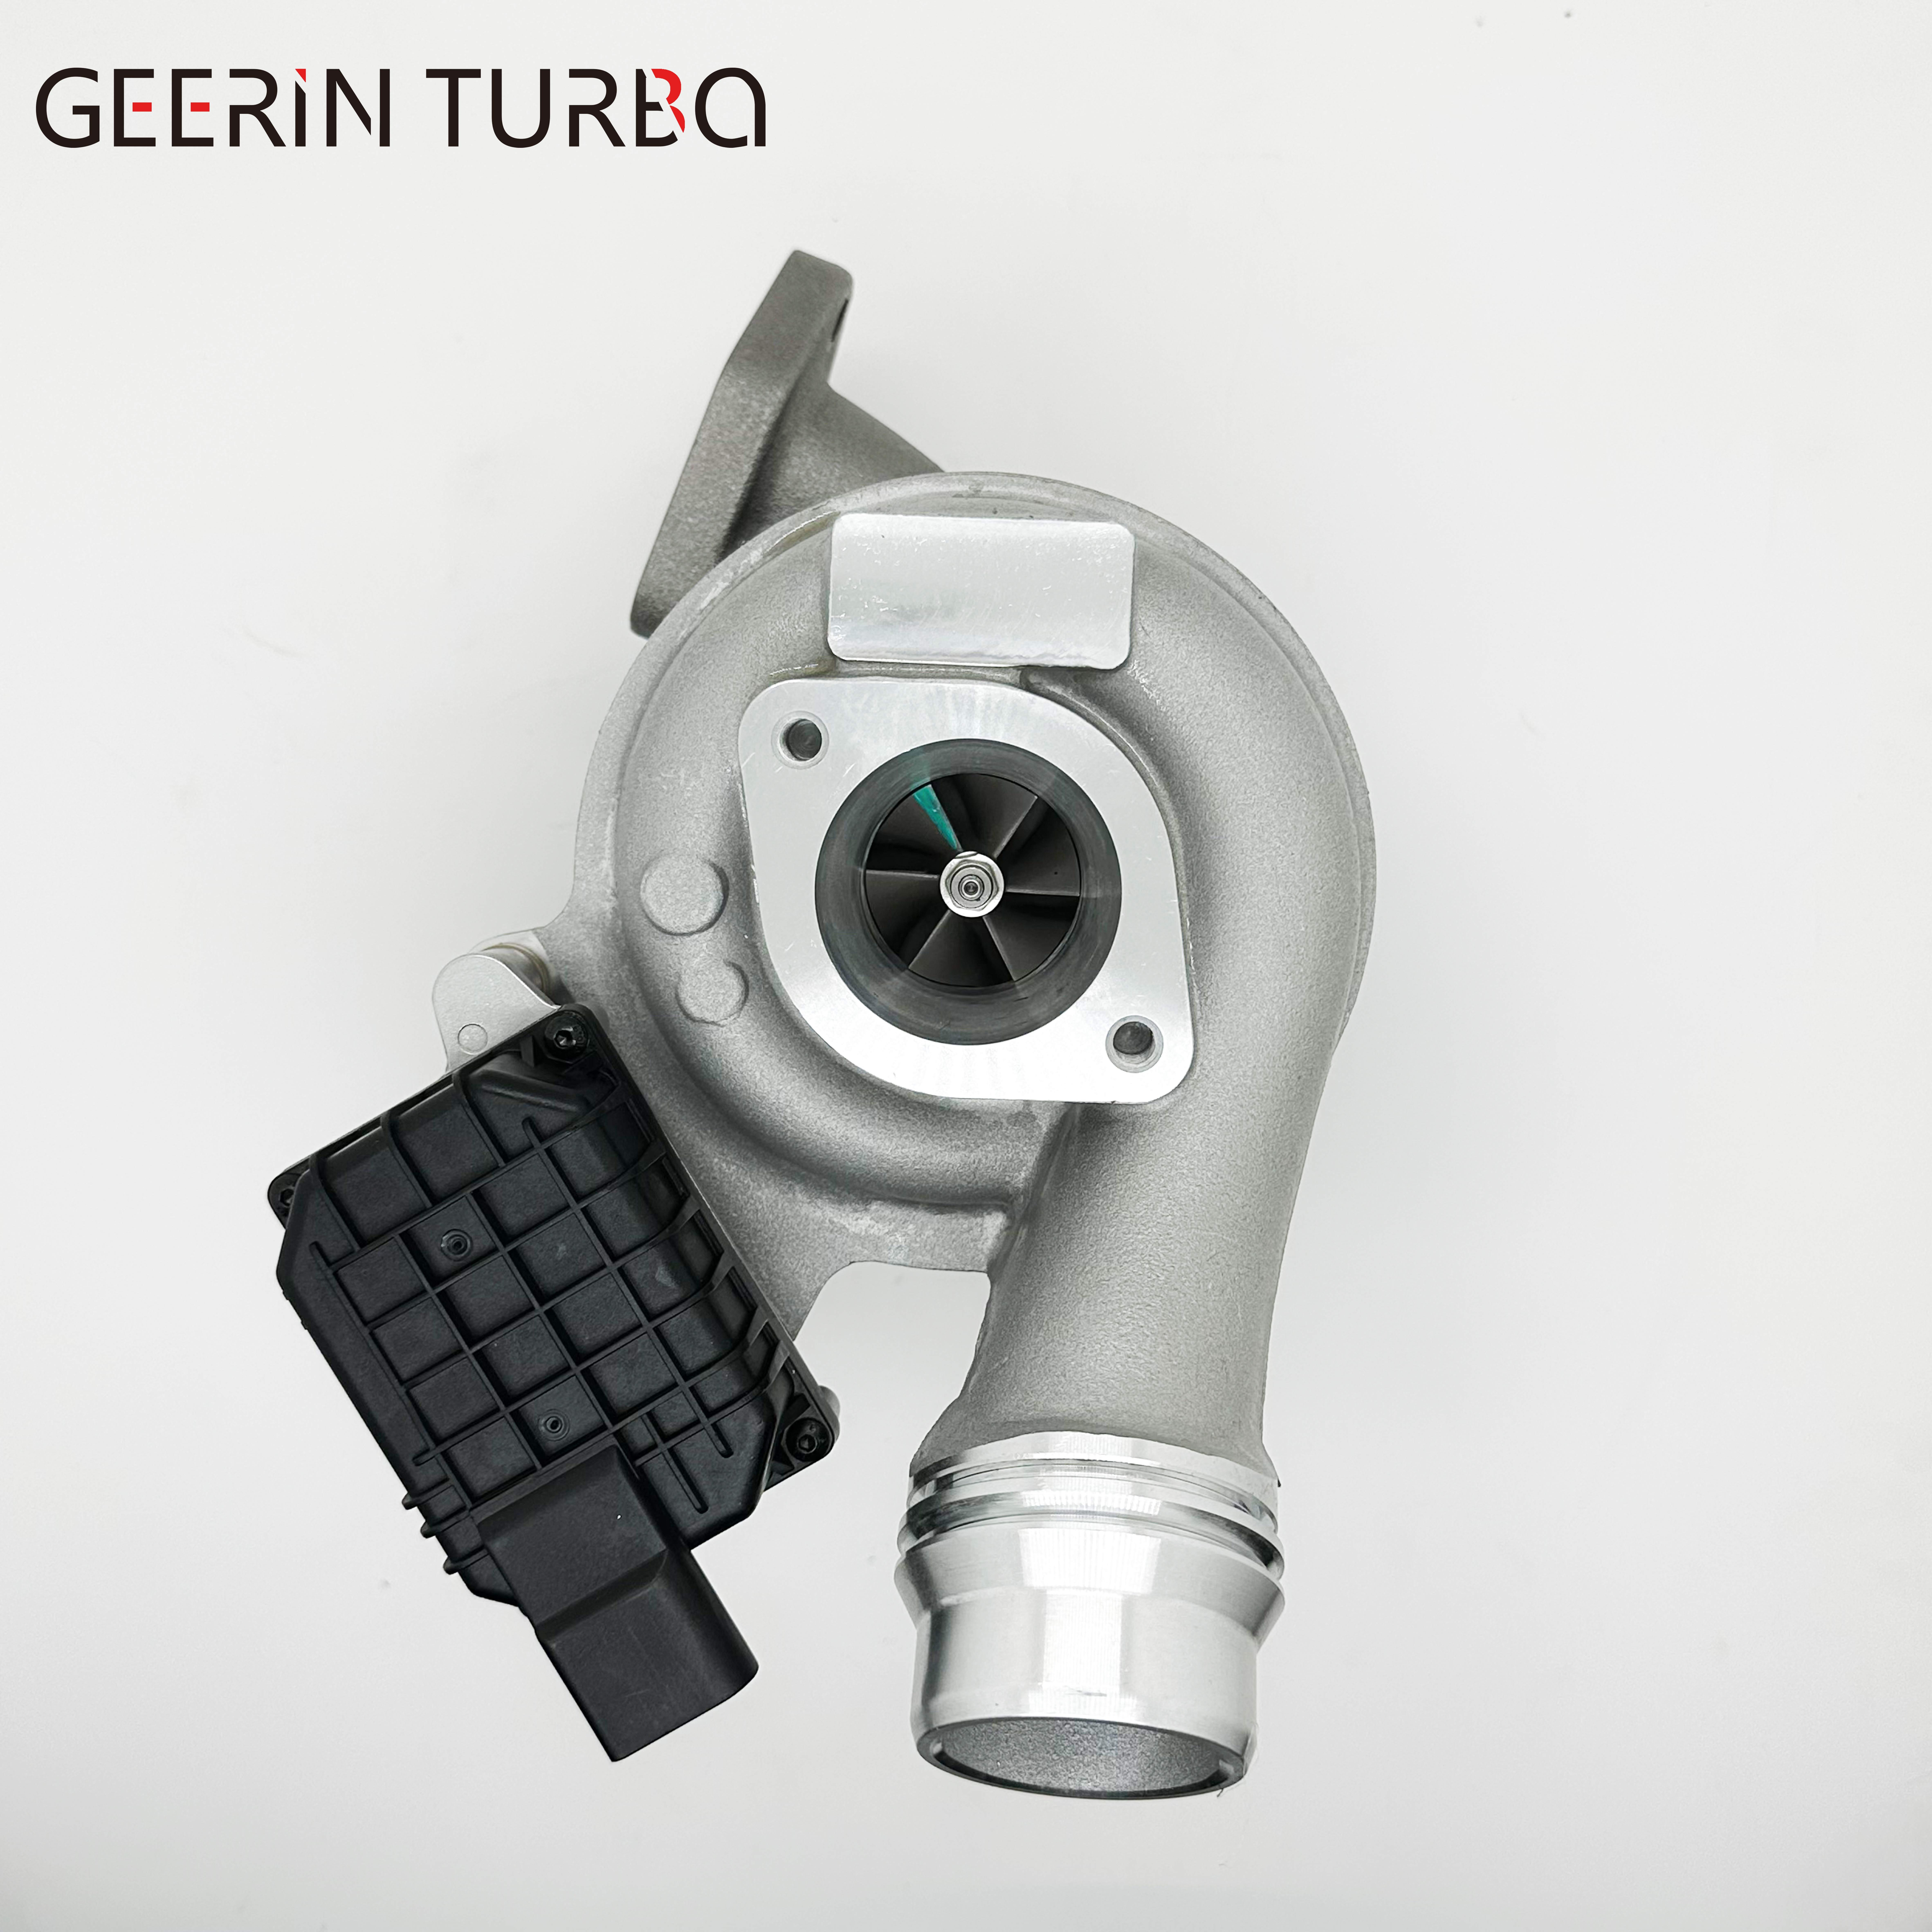 GTD1449VZ 28231-4A730 823665-5009S Turbo Turbocharger Kit Factory